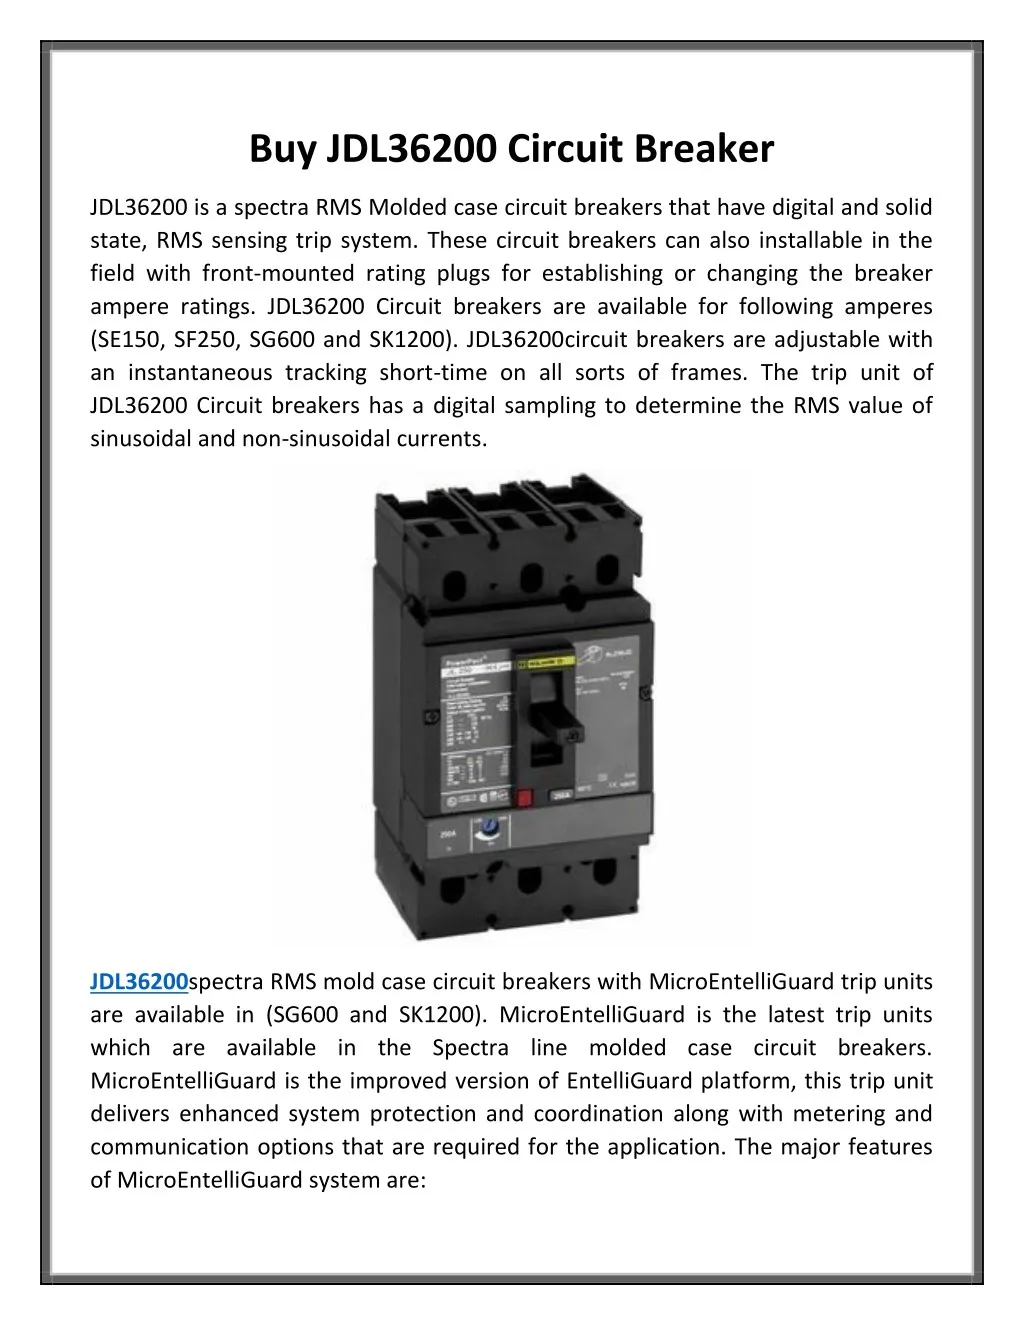 buy jdl36200 circuit breaker